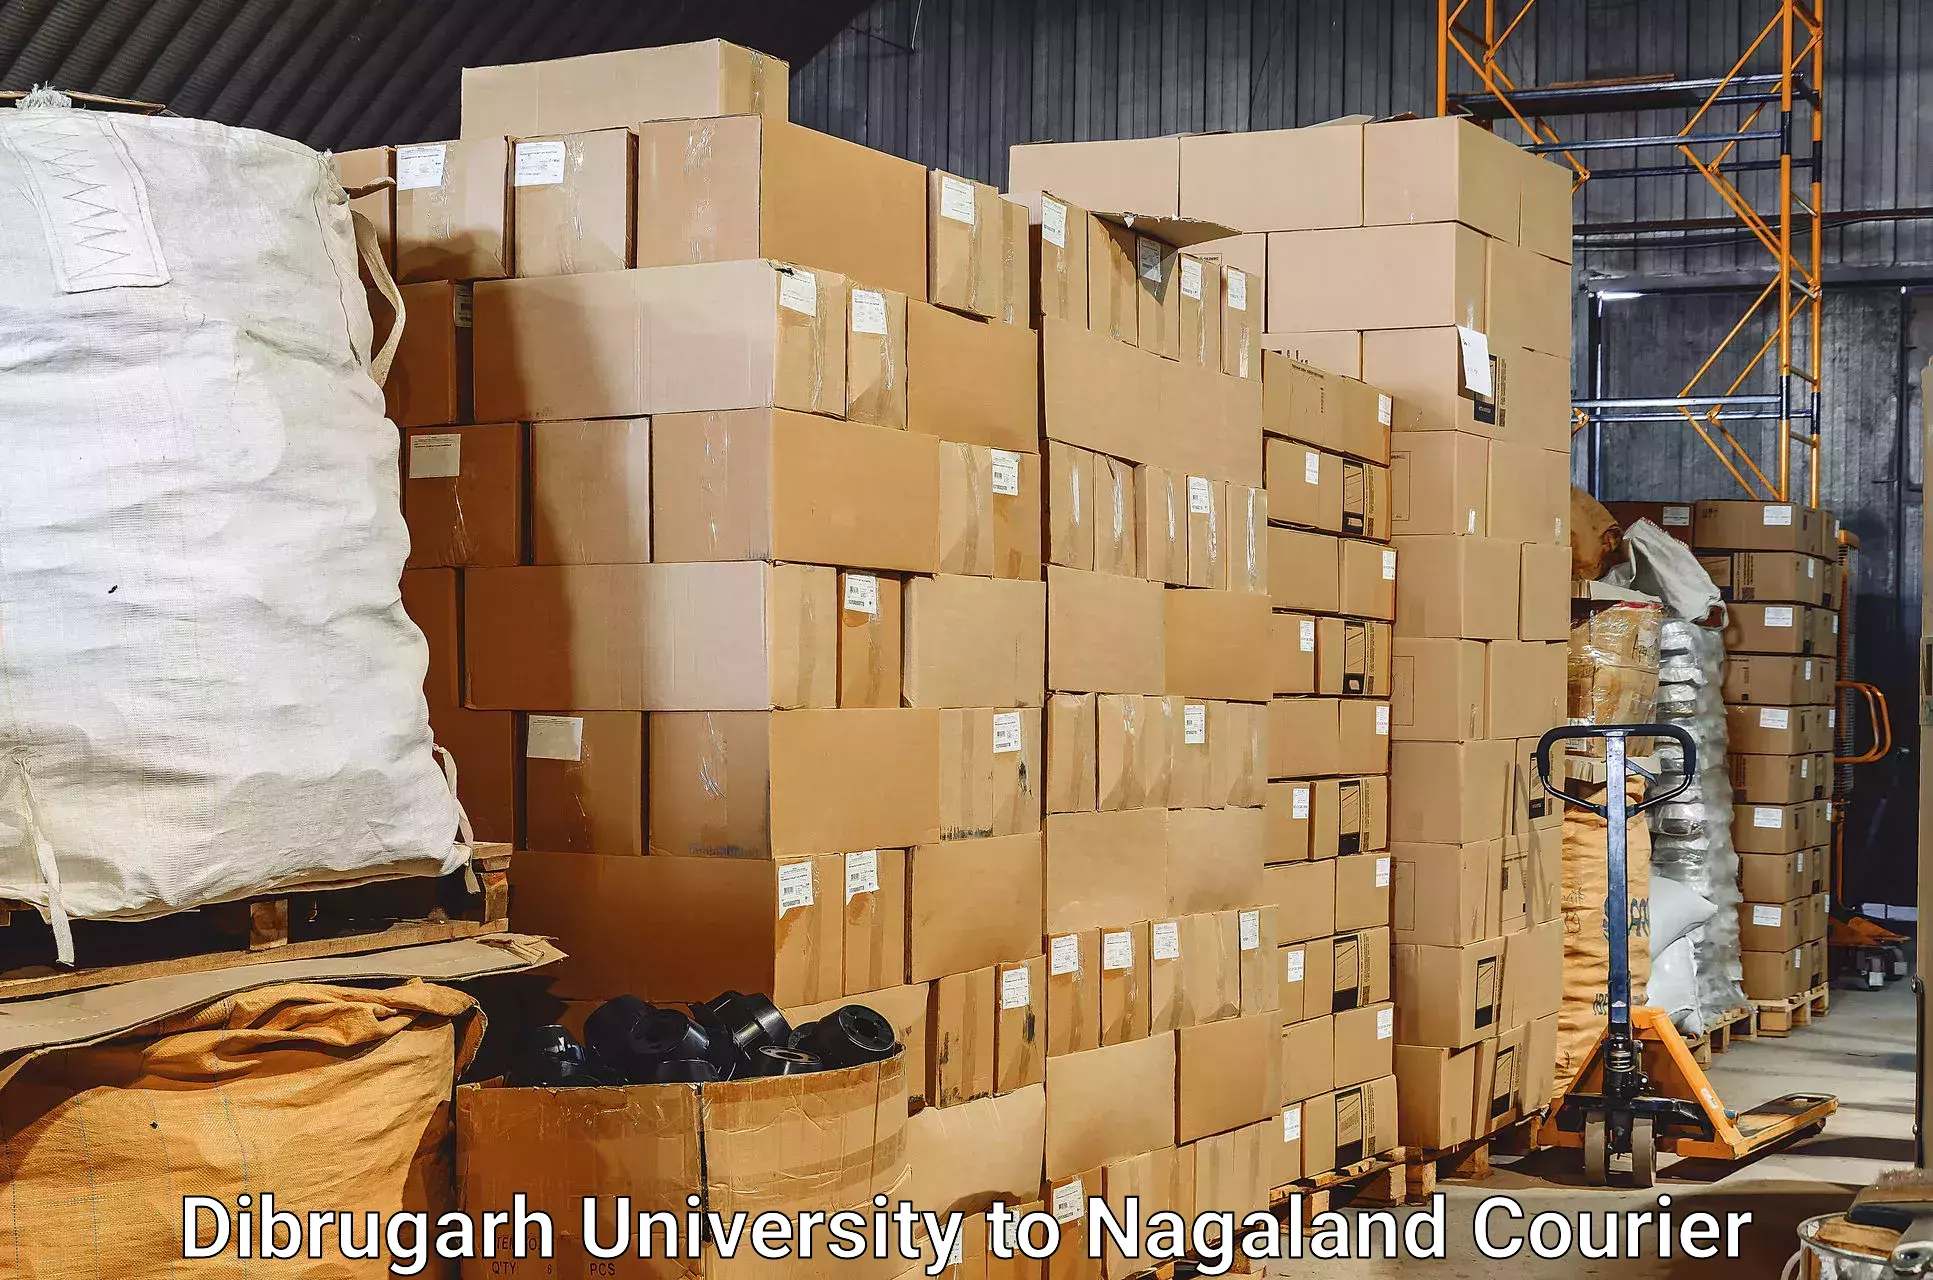 Same day luggage service Dibrugarh University to Nagaland